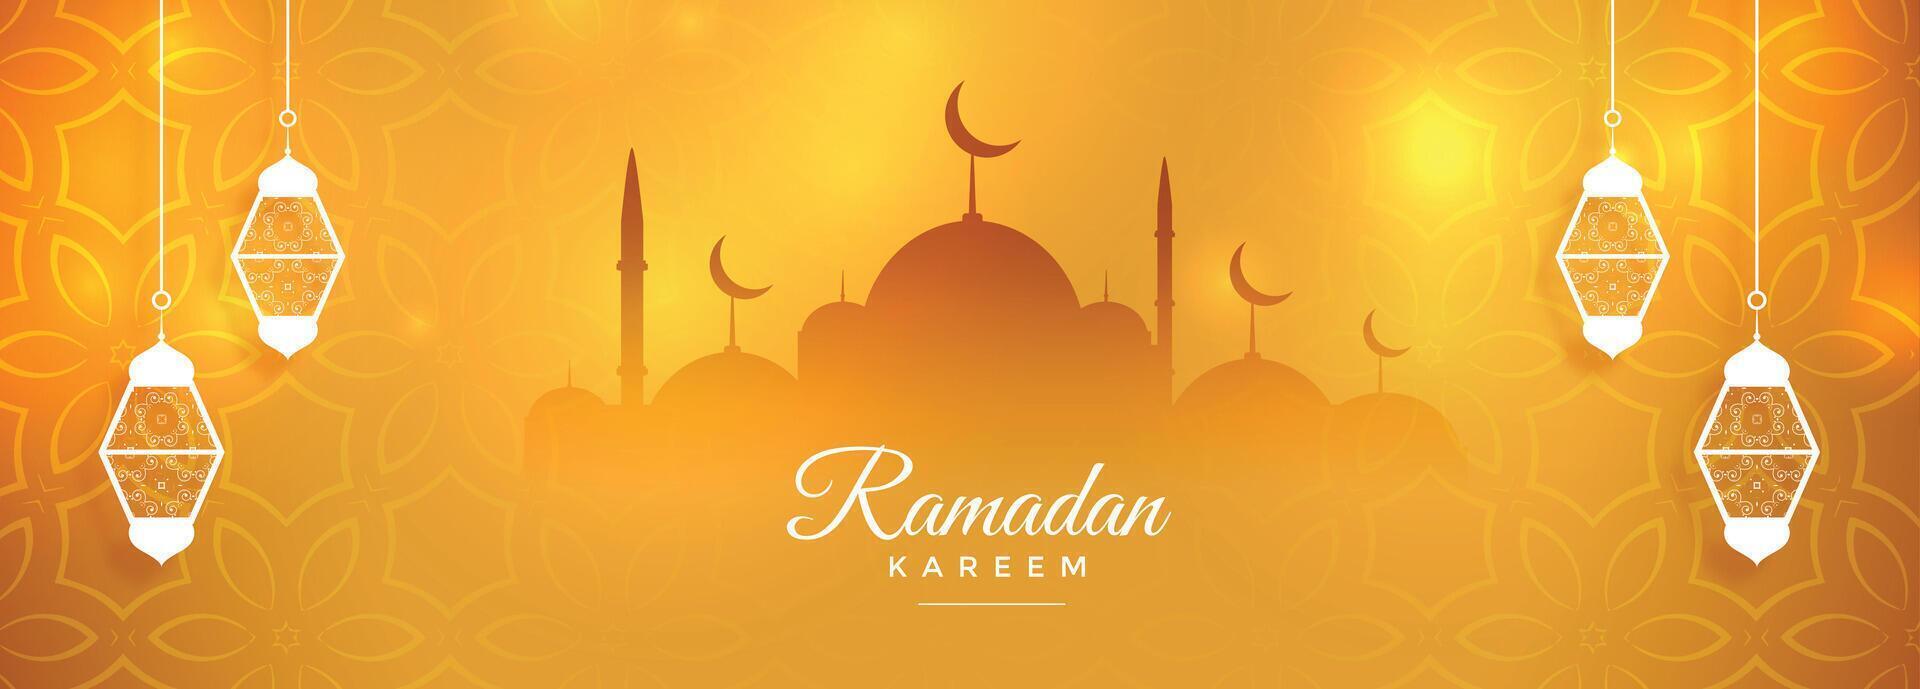 mooi hoor Ramadan kareem maand viering banier ontwerp vector